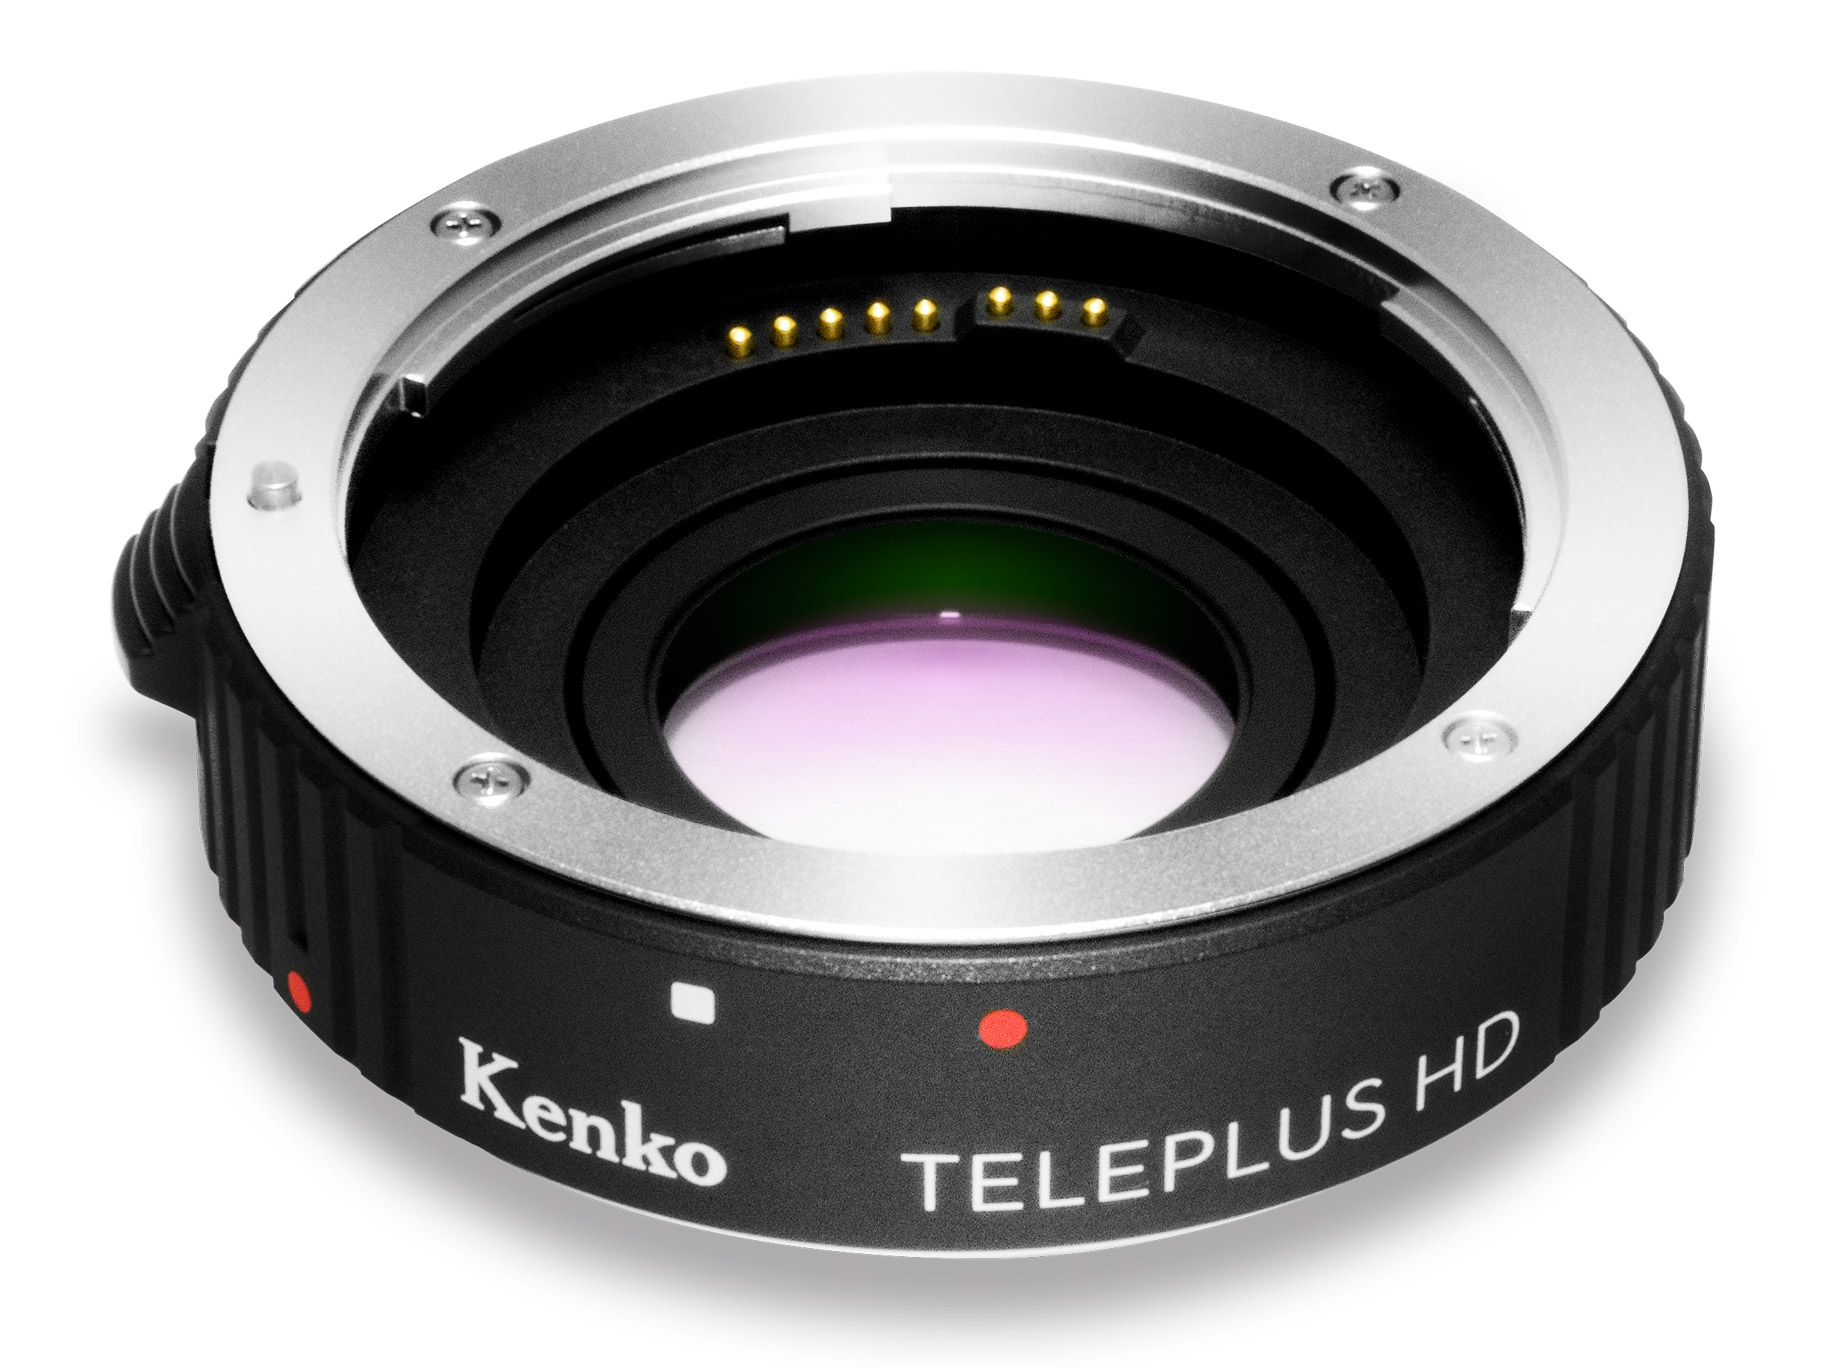 Kenko Teleplus 1.4x HD DGX 